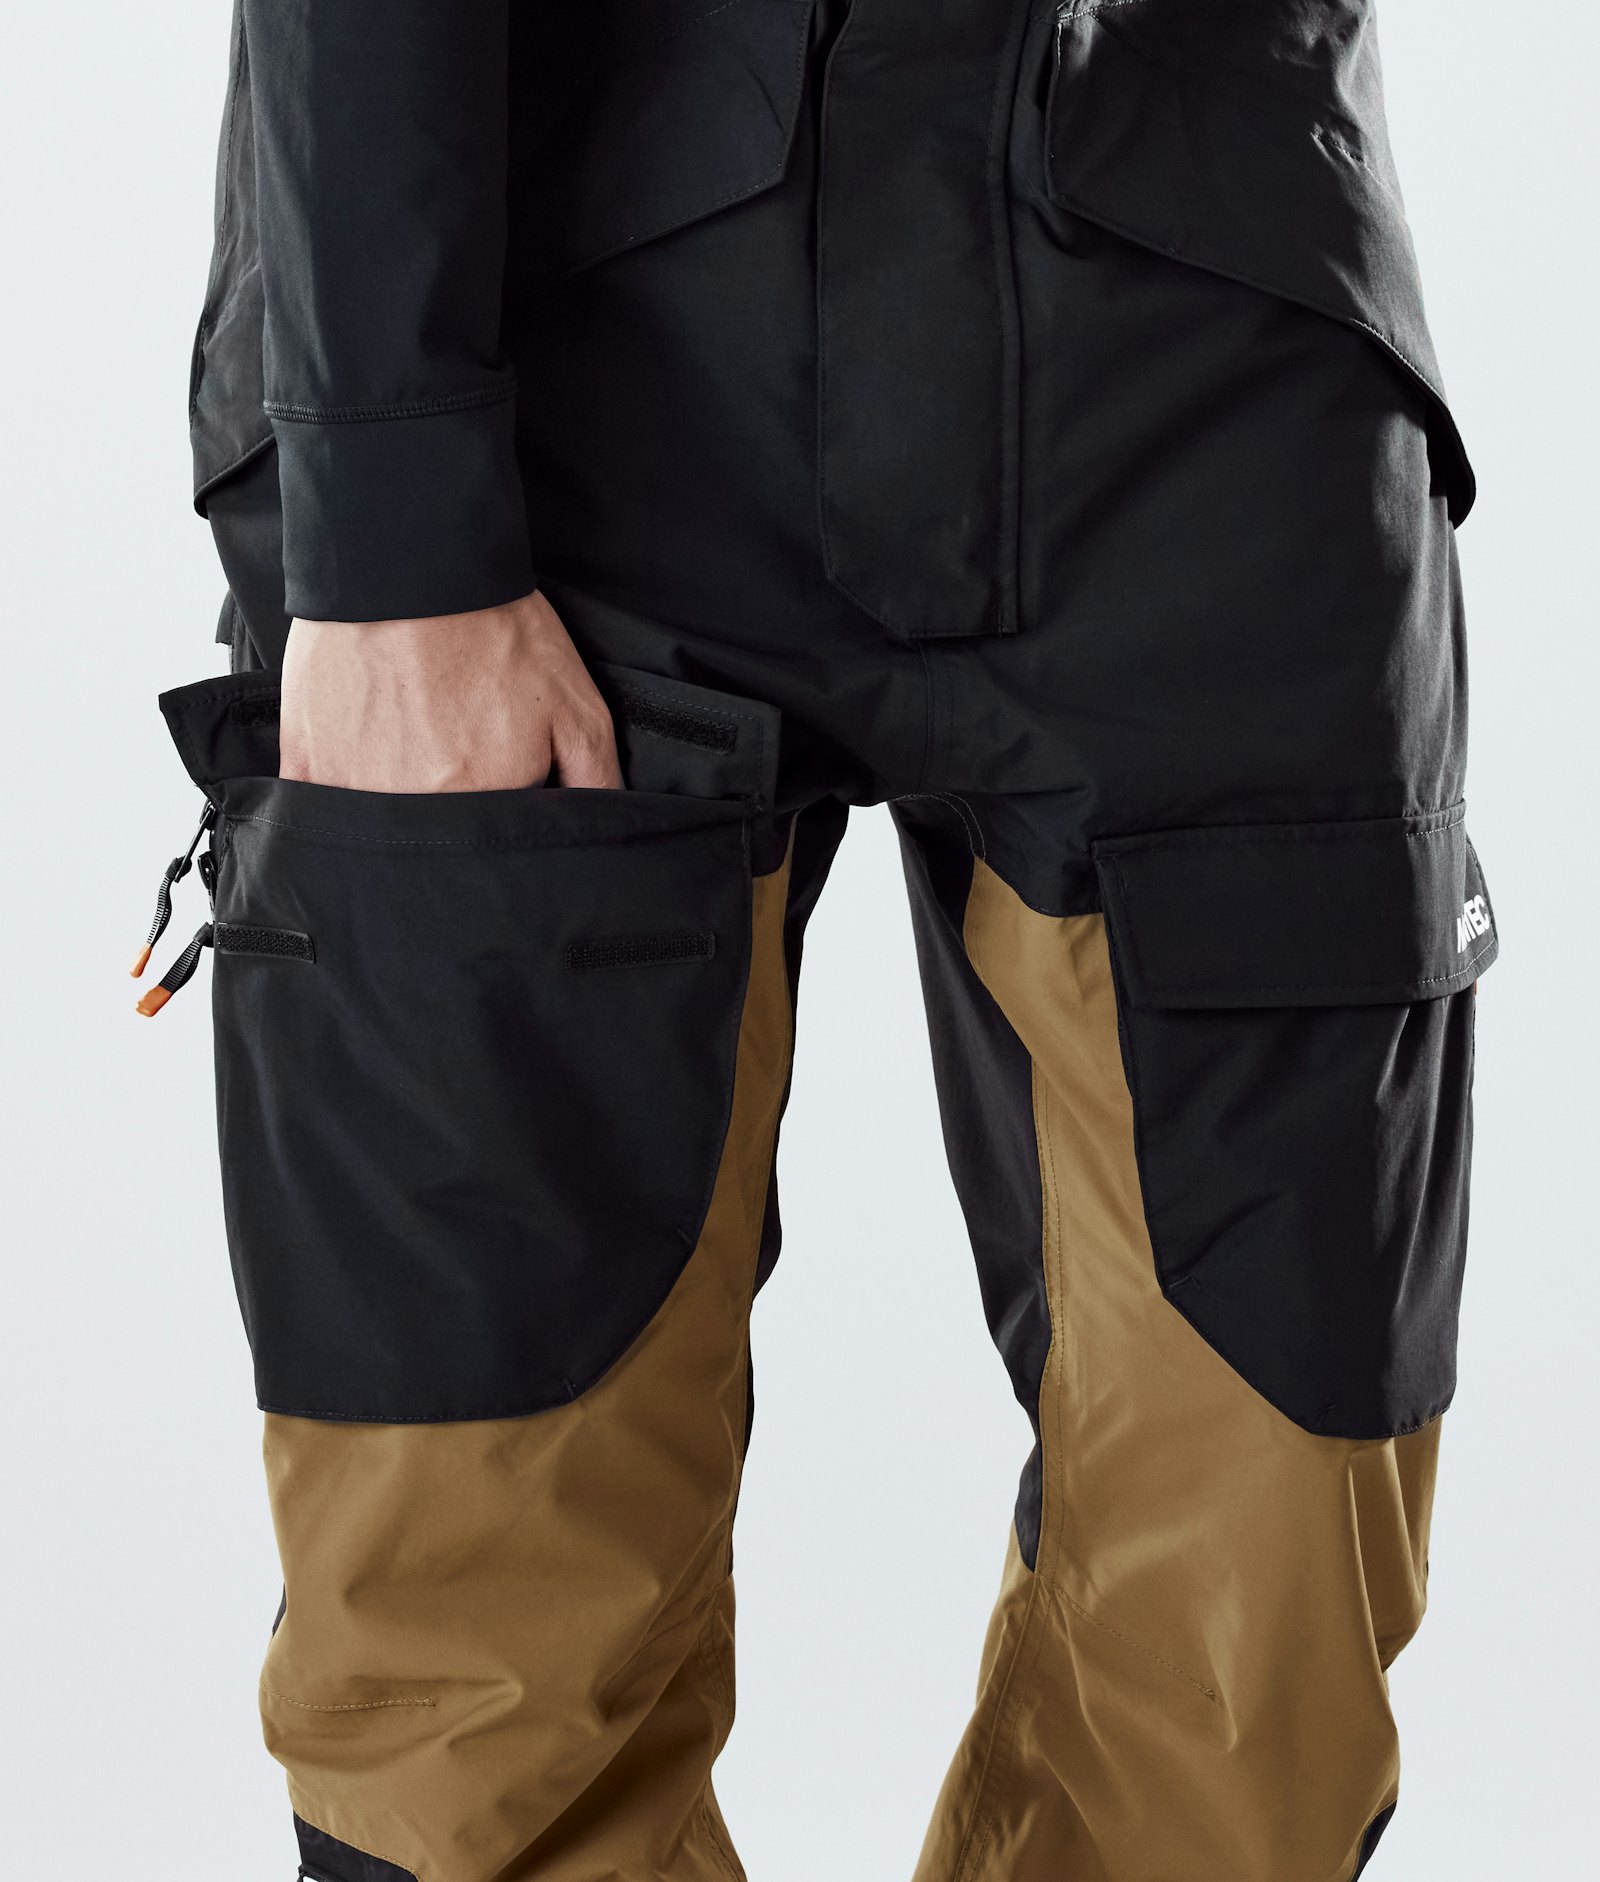 Fawk 2020 Ski Pants Men Black/Gold